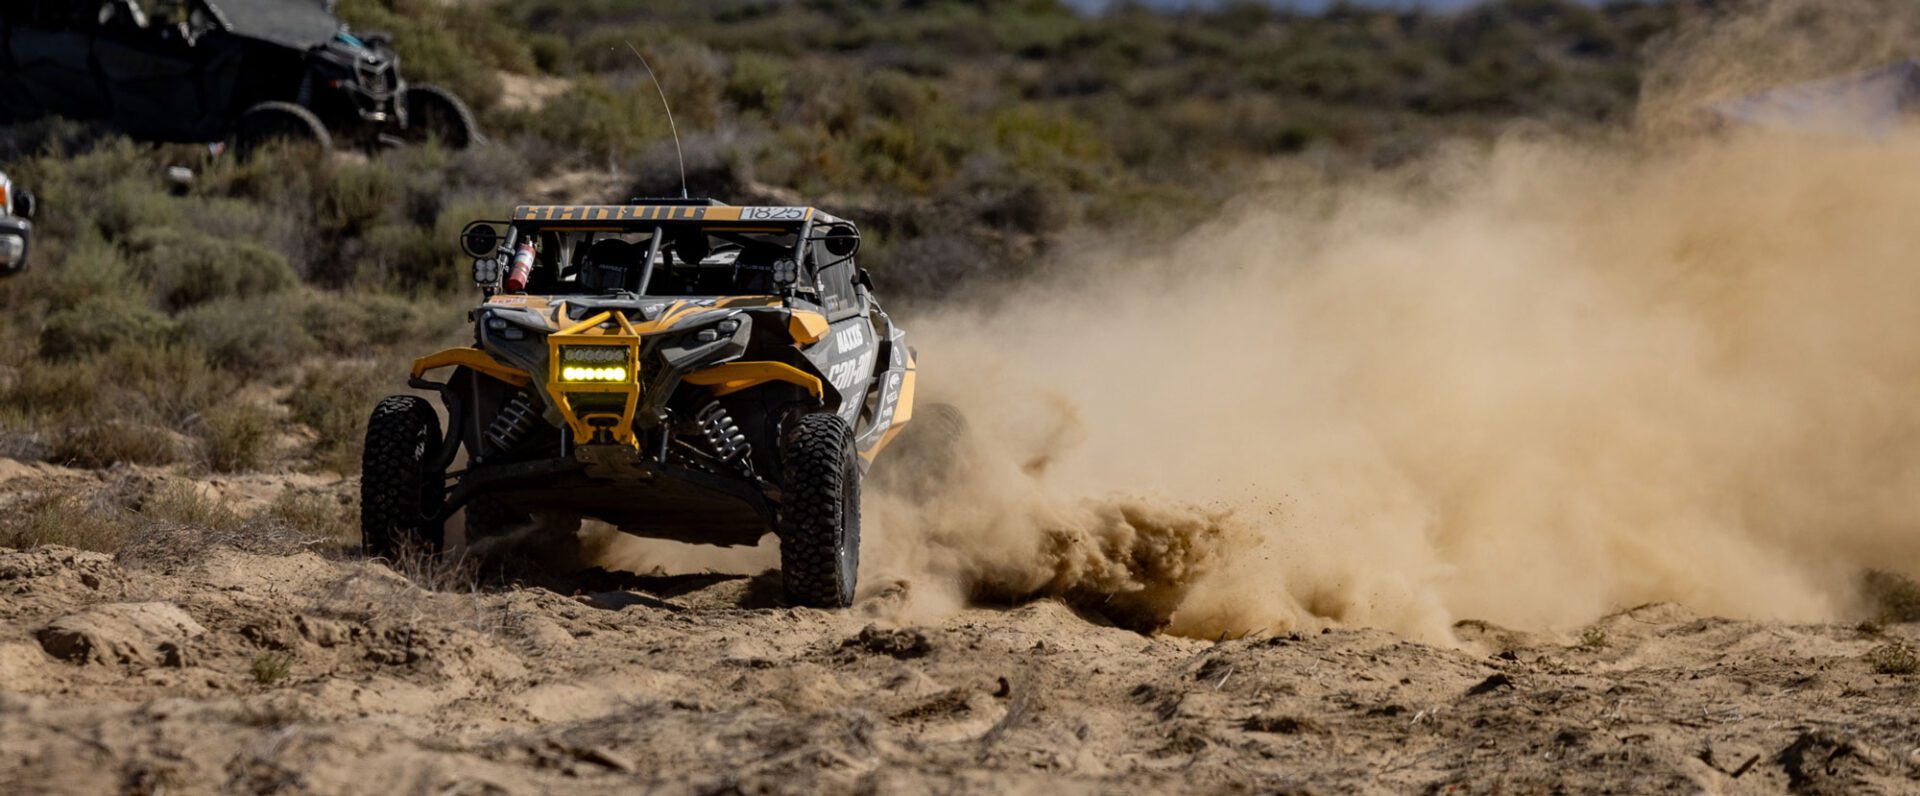 SxS racing through the desert.